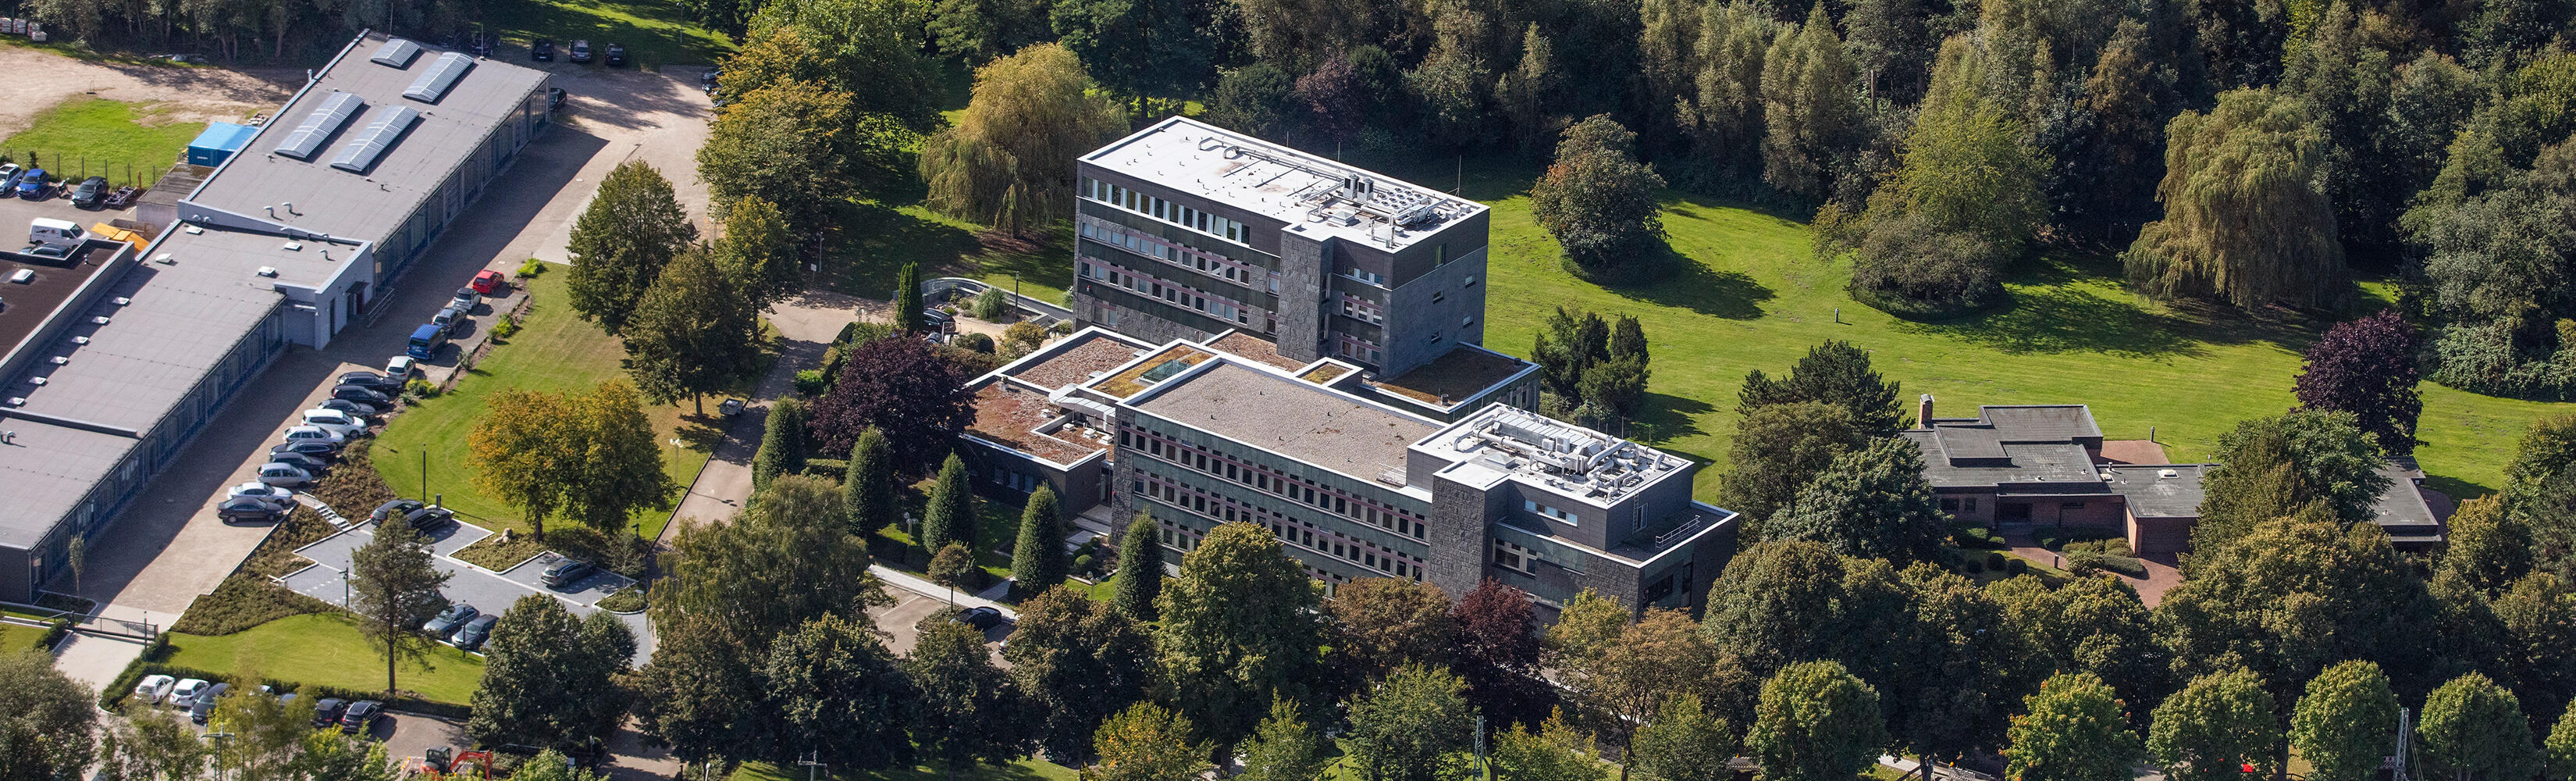 Firmenzentrale SCHAUMANN in Pinneberg